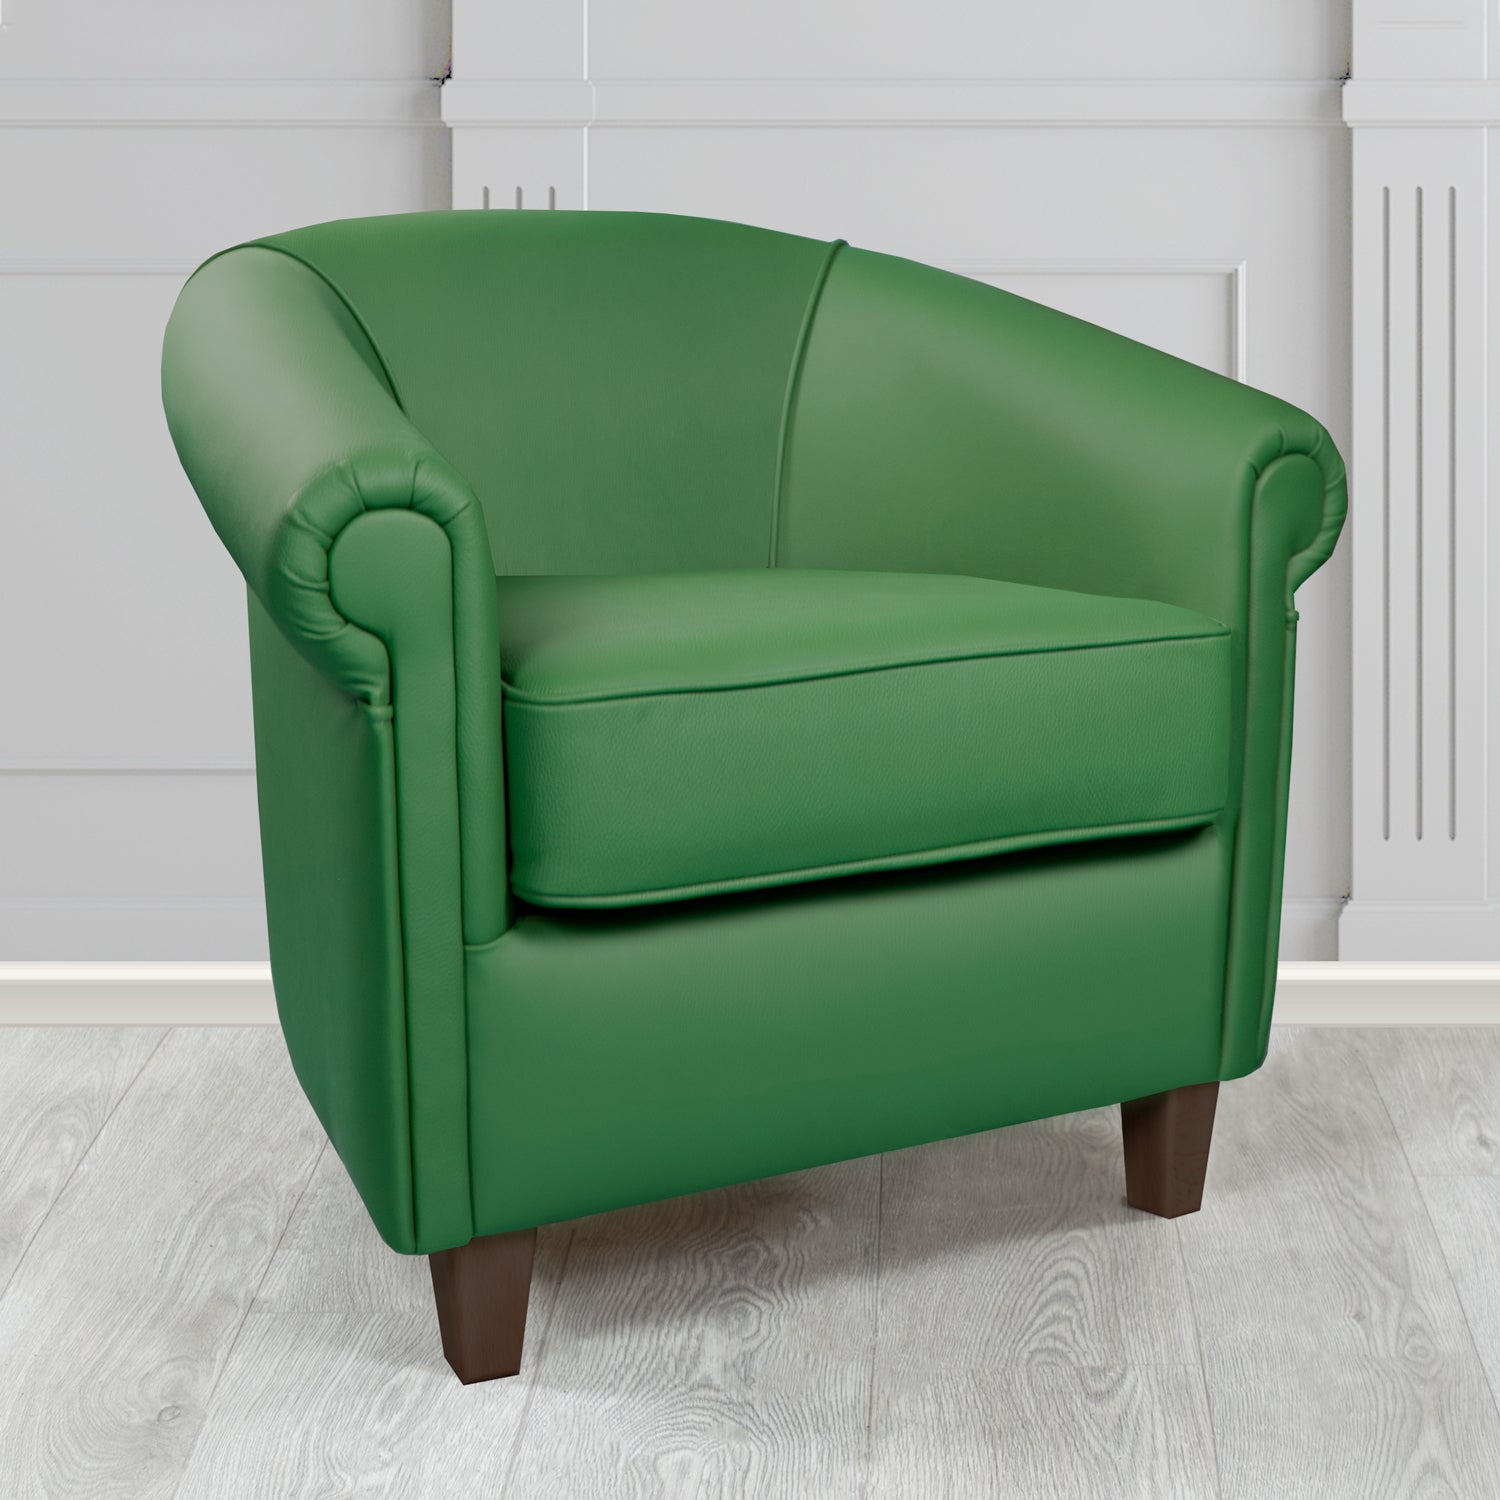 Siena Tub Chair in Crib 5 Shelly Jade Green Genuine Leather - The Tub Chair Shop